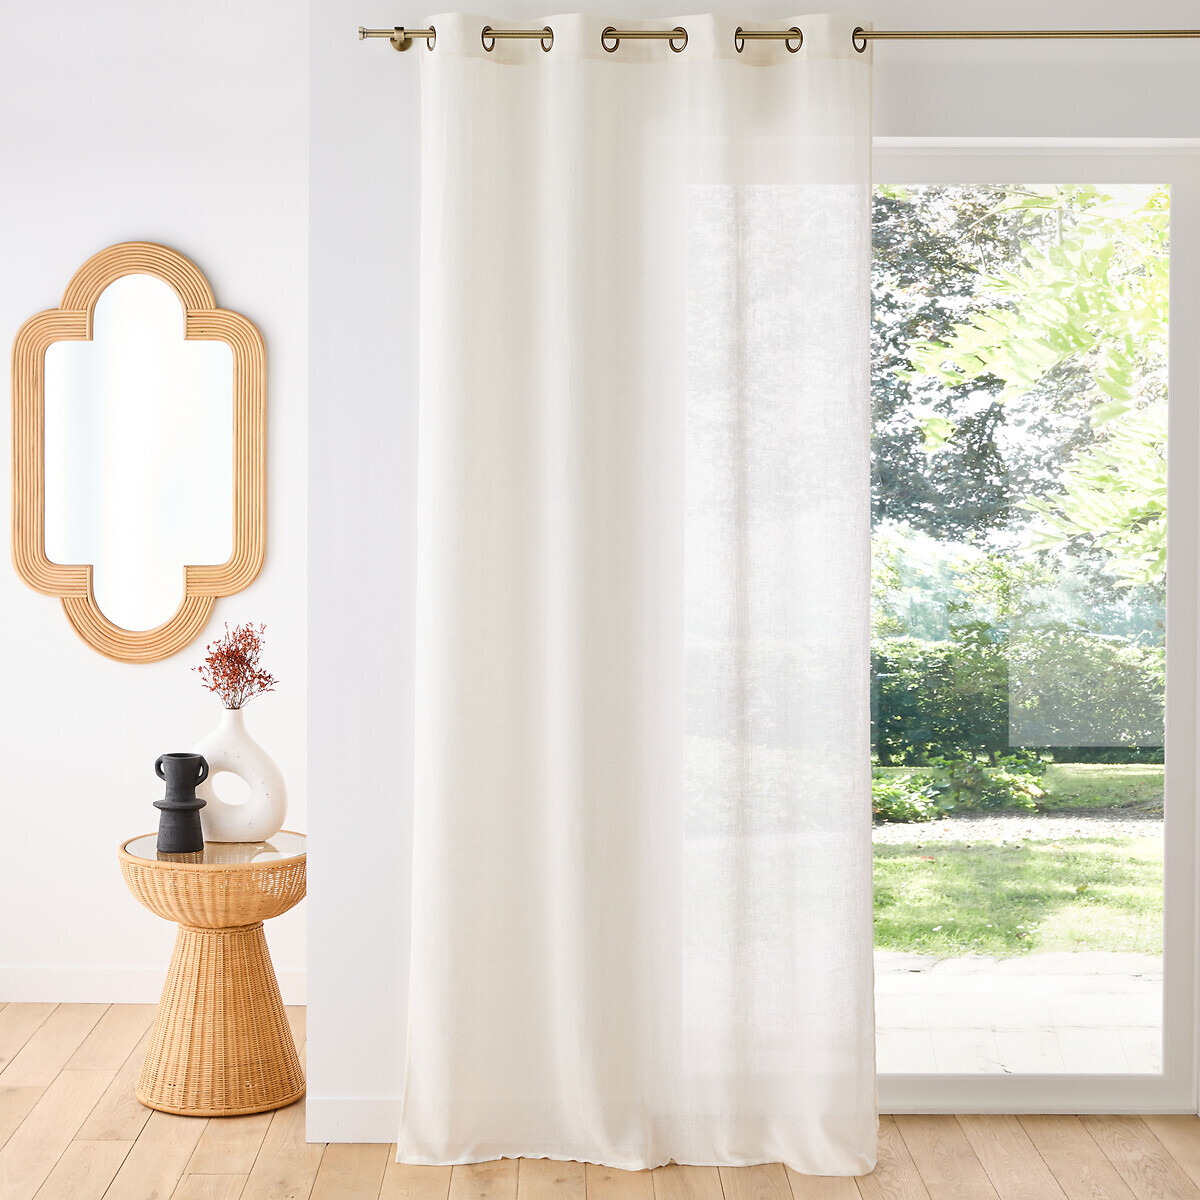 Aron Polyester & Linen Sheer Eyelet Curtain - image 1